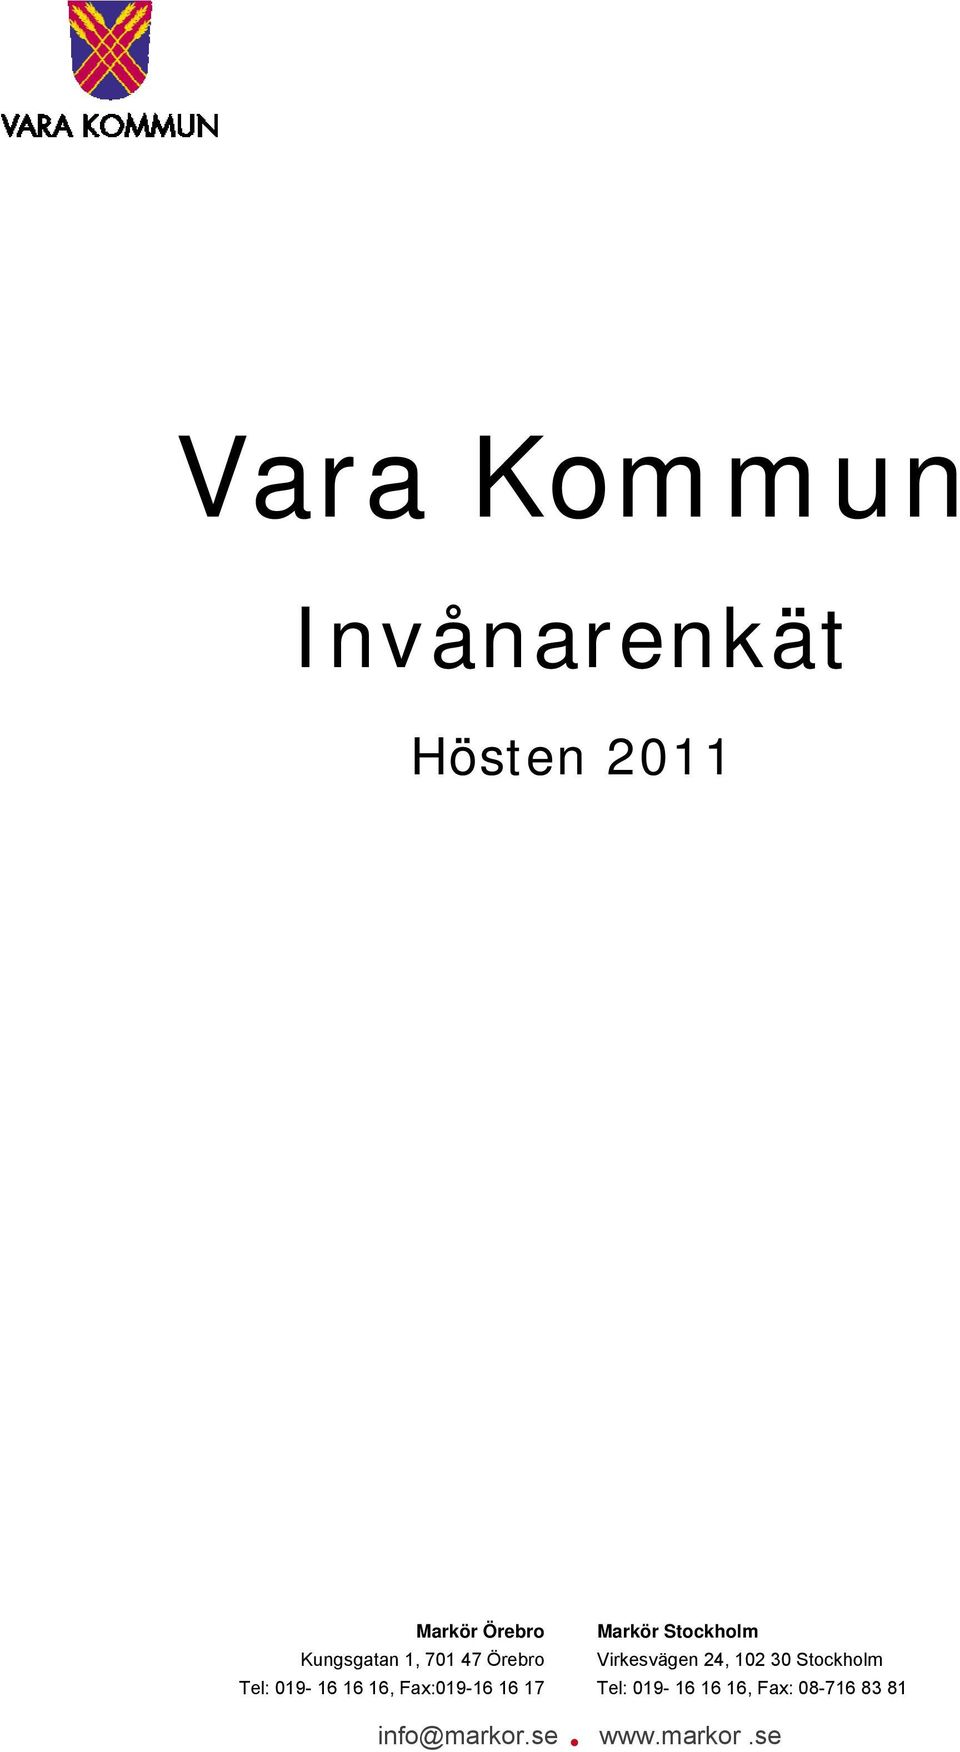 30 Stockholm Tel: 019-16 16 16, Fax:019-16 16 17 Tel: